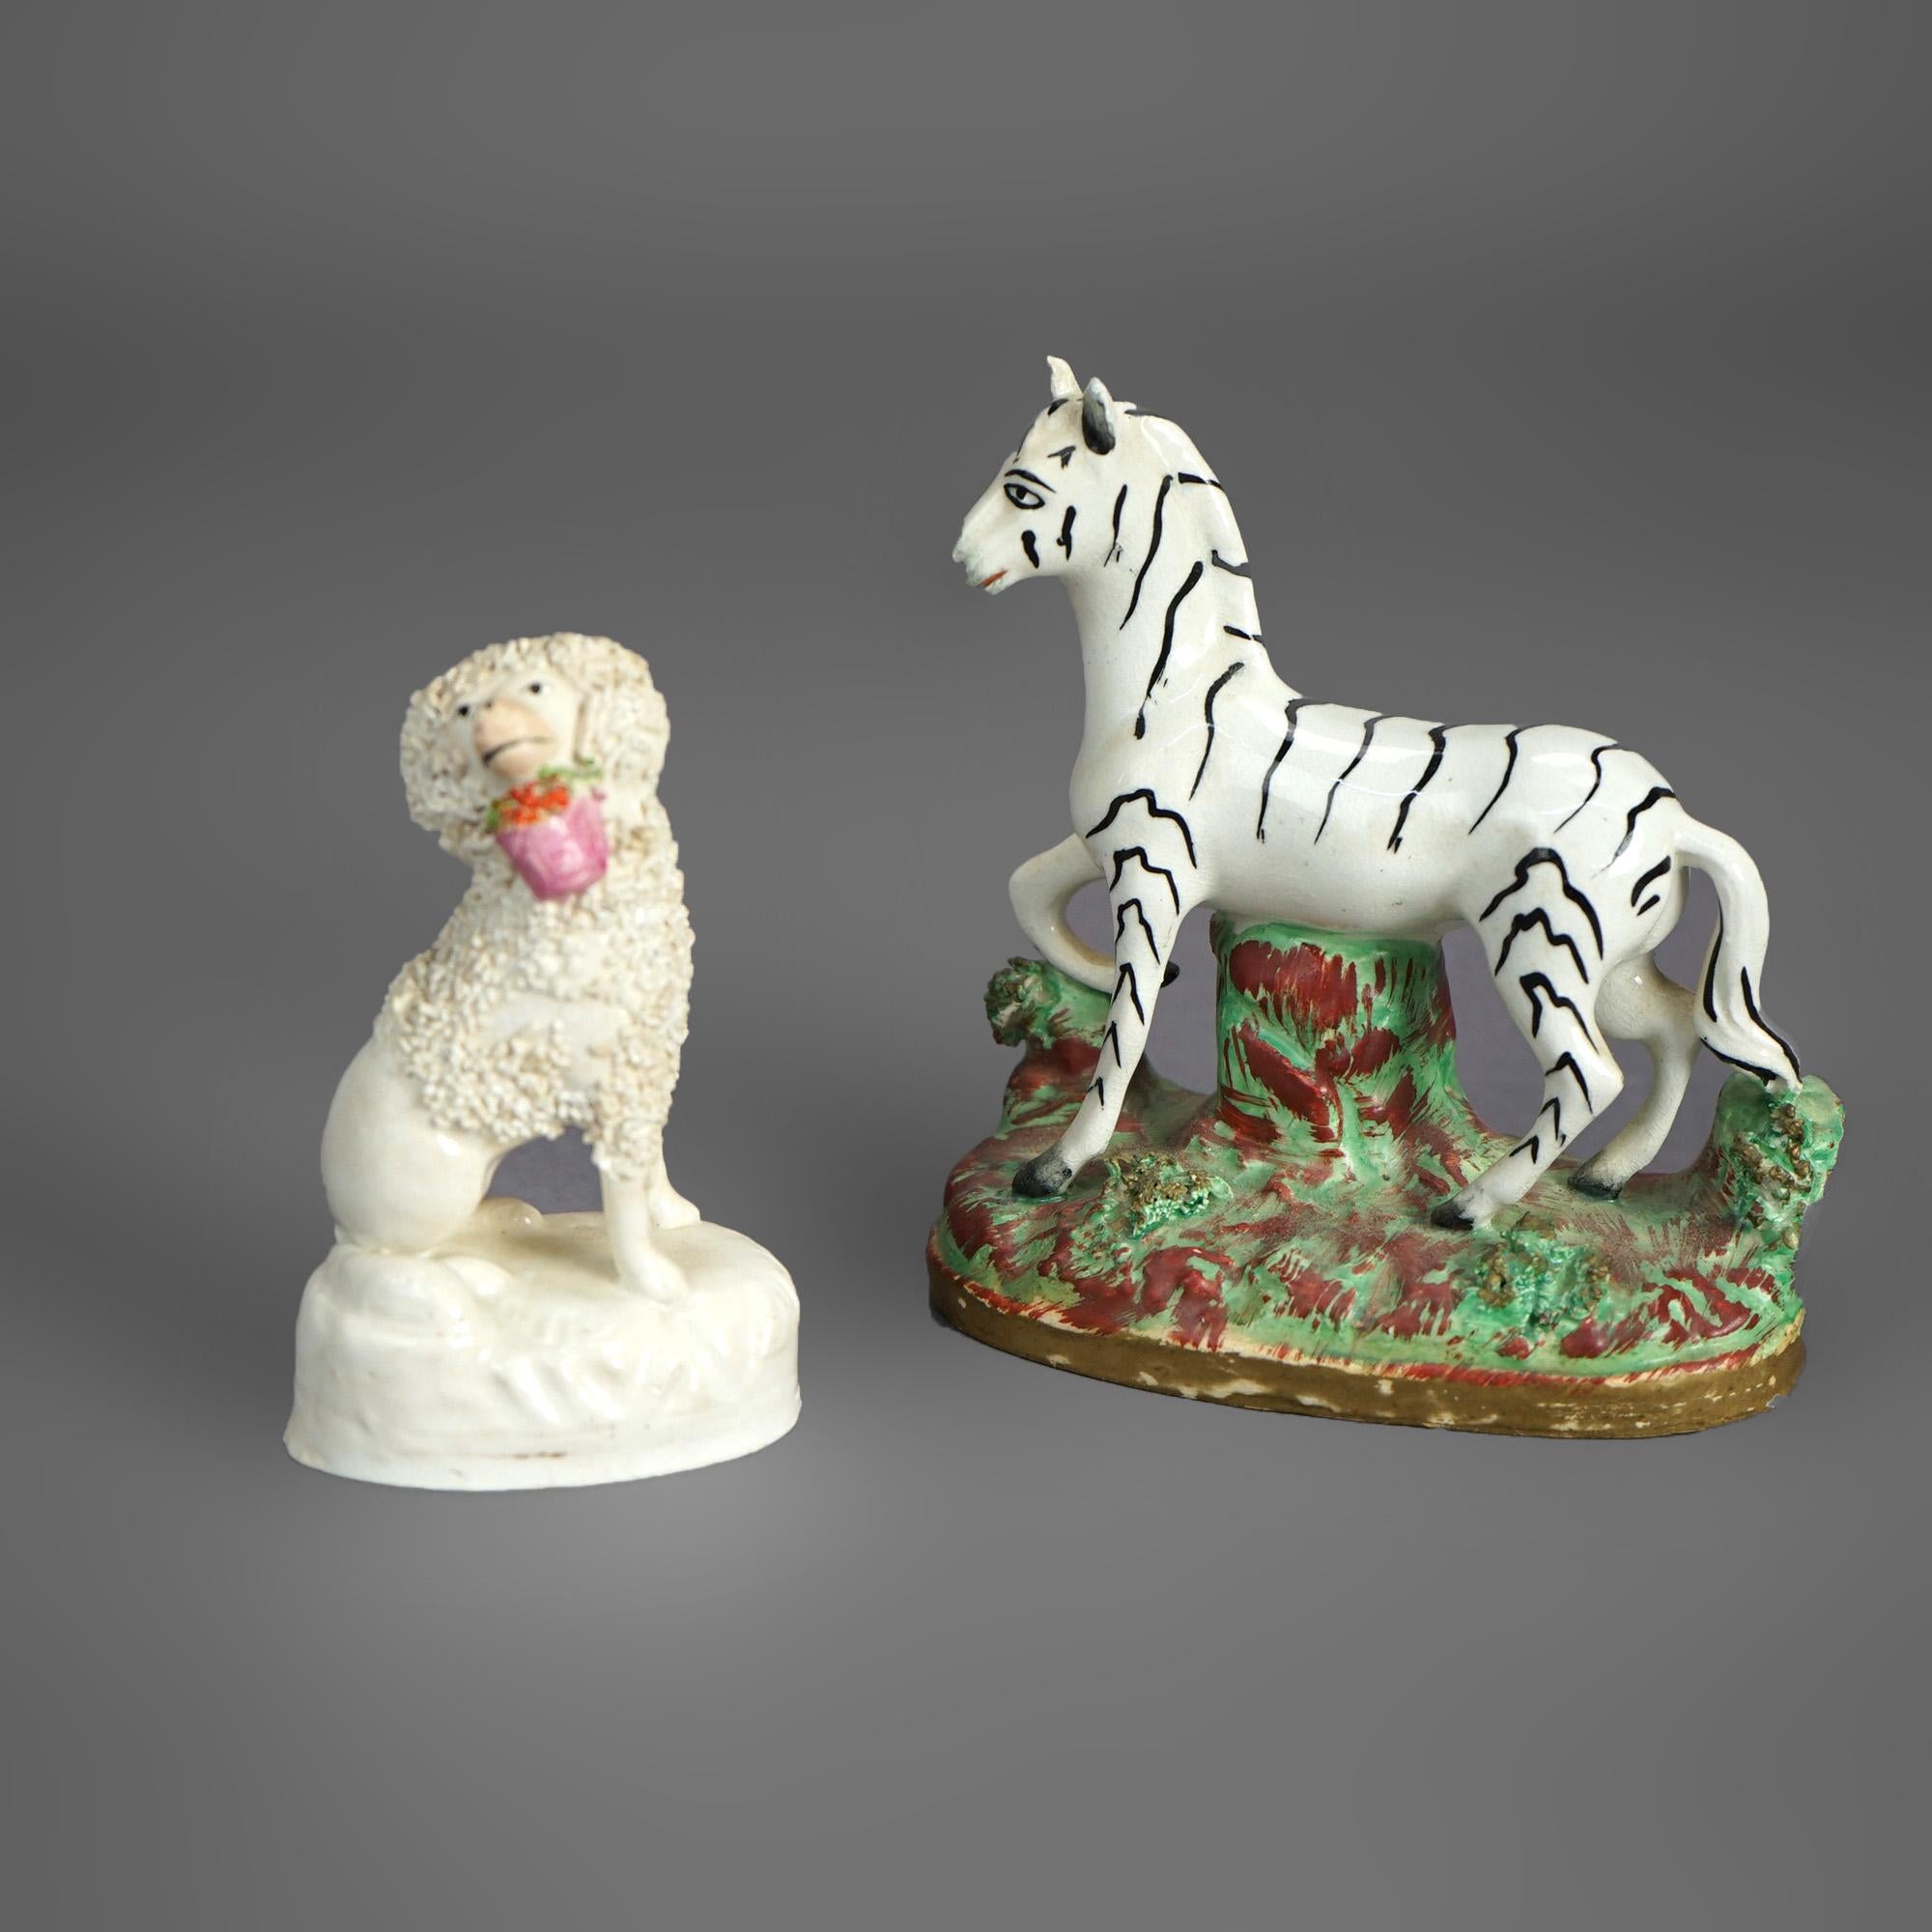 Antique Staffordshire Polychromed Porcelain Zebra & Poodle Dog Figures C1870

Measures- Zebra: 5''H x 4.75''L x 2.5''D; Dog: 4''H x 2.5''L x 2''D